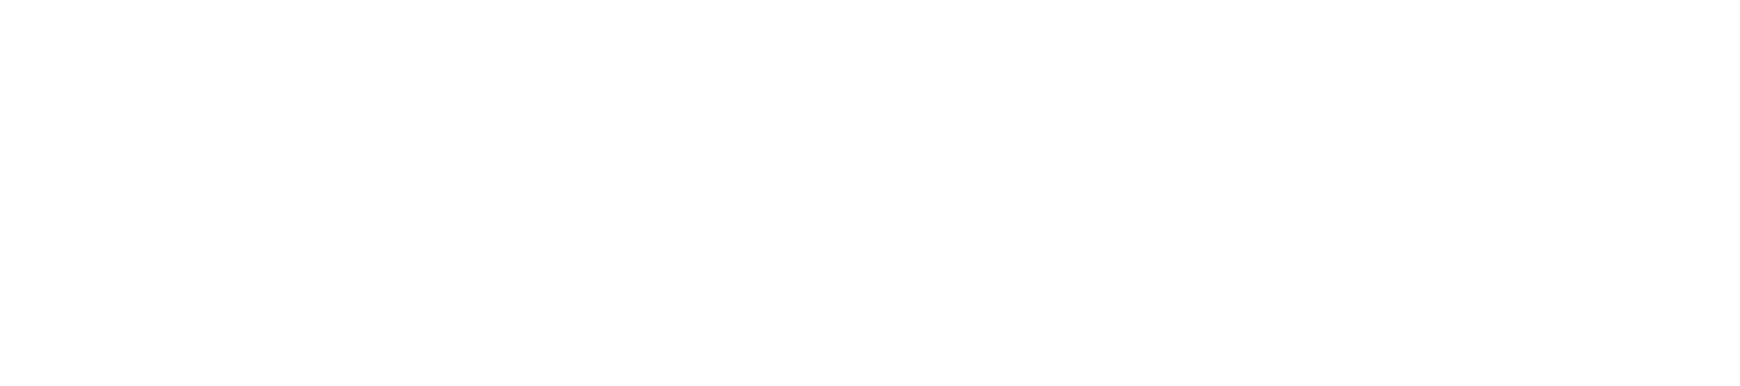 Nevada Advocates